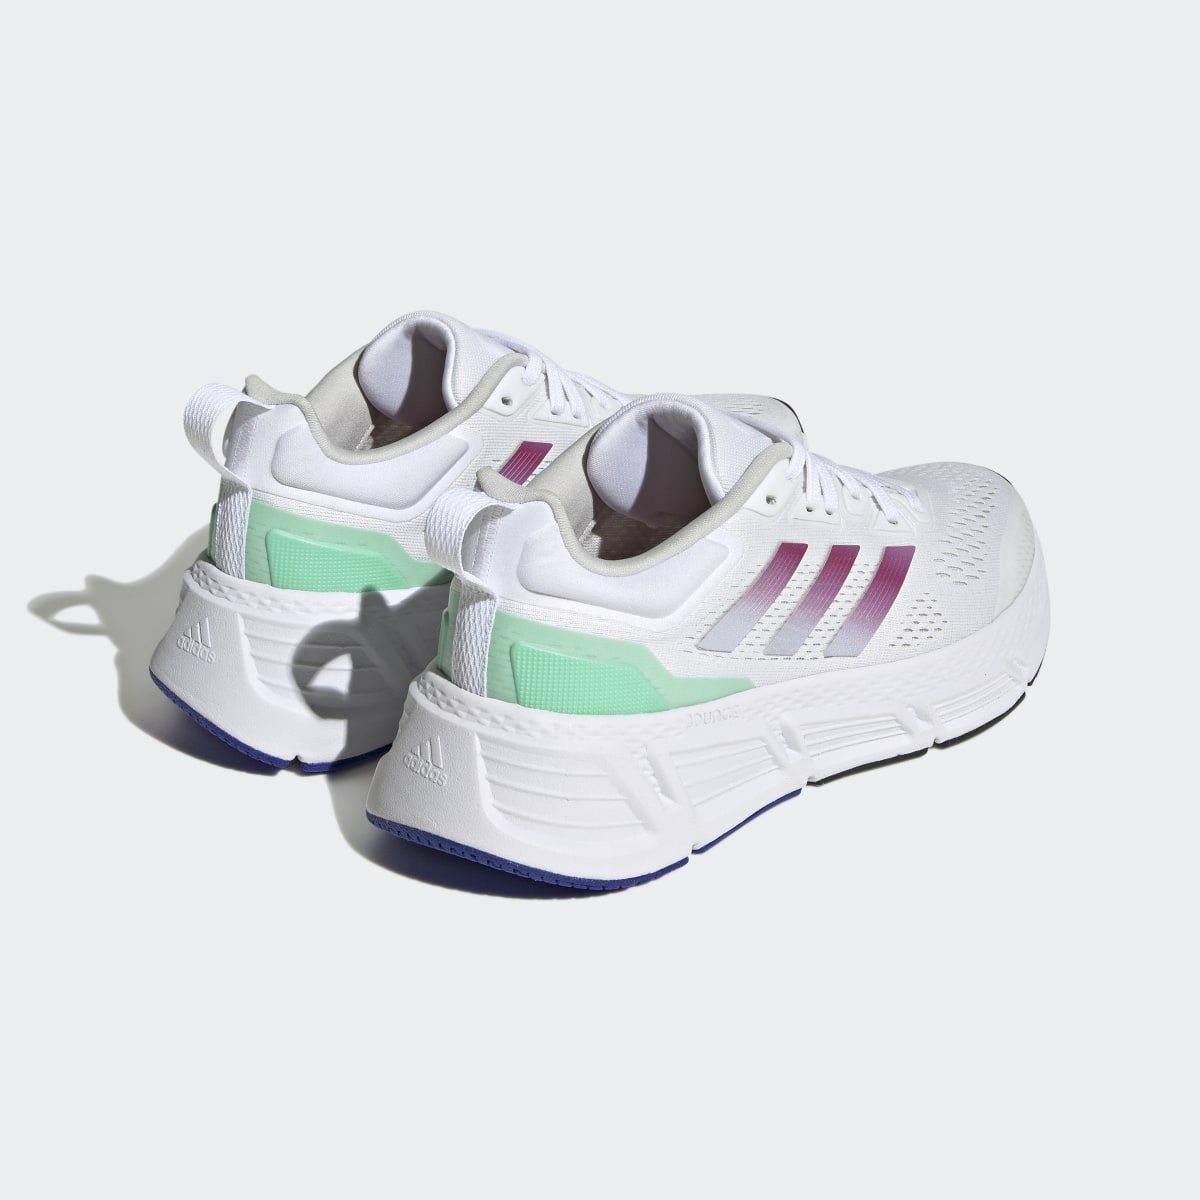 Adidas Questar Schuh. 6